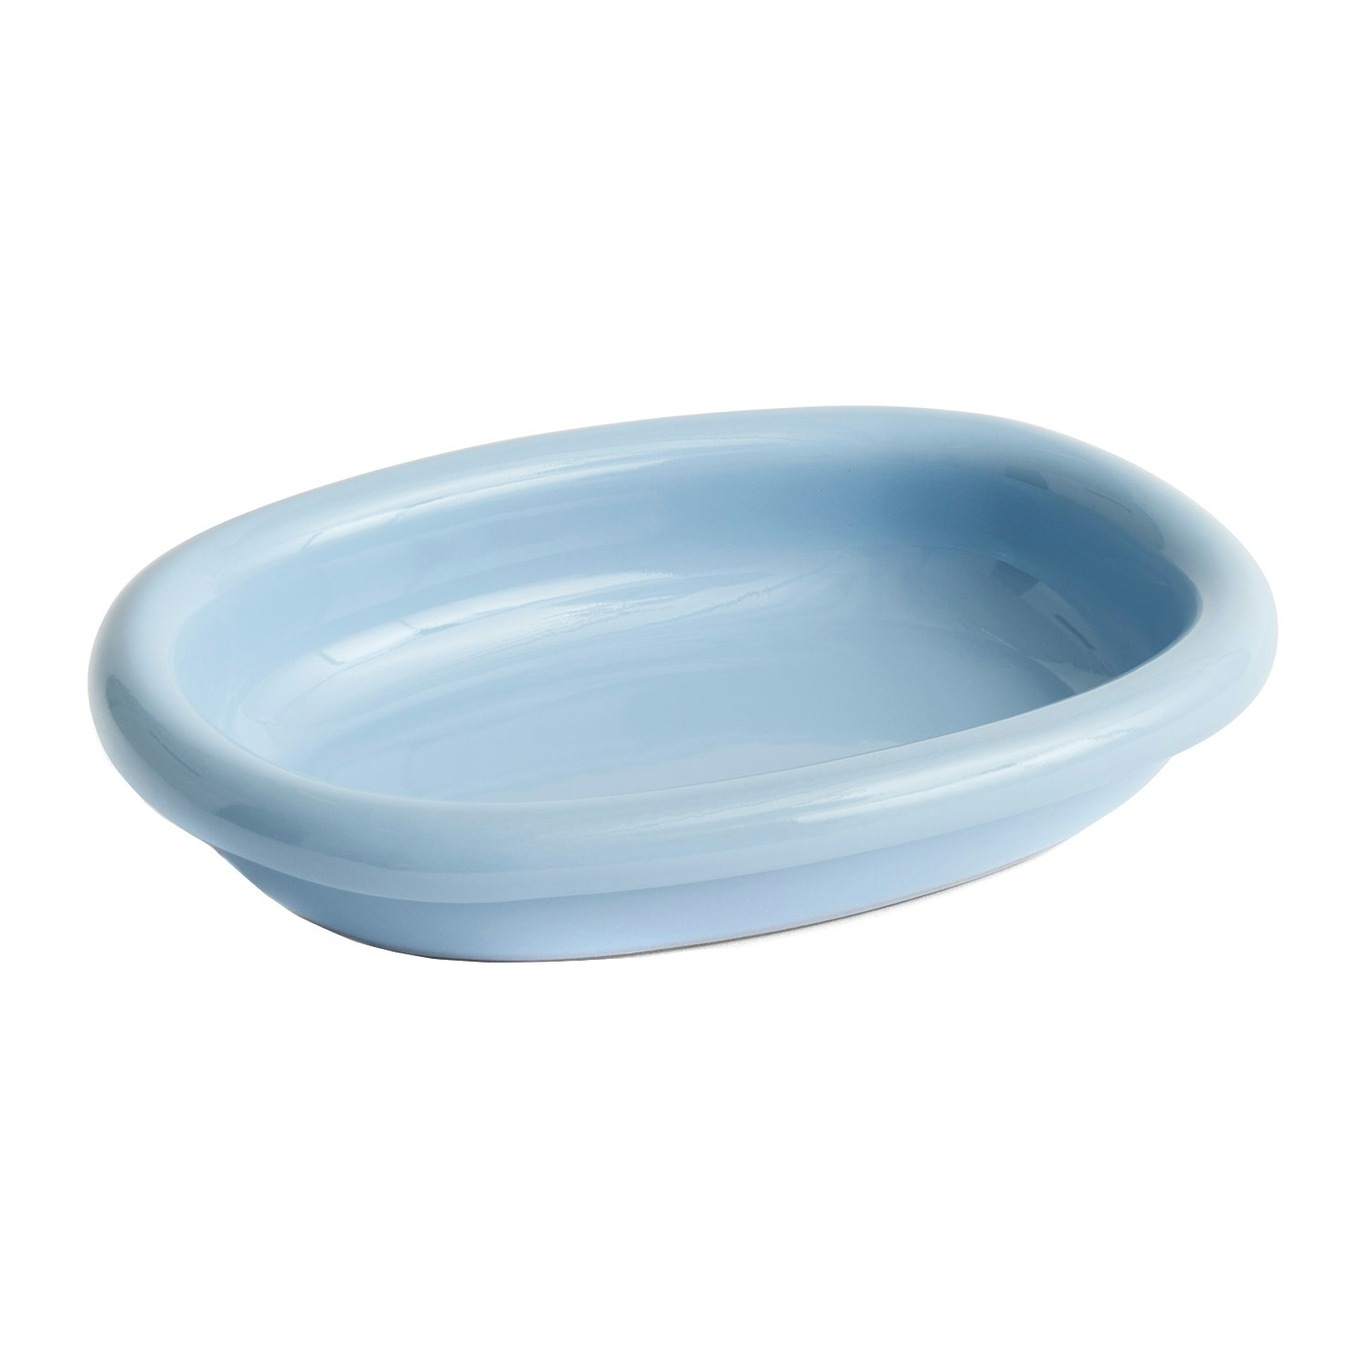 Barro Dish Small, Light Blue